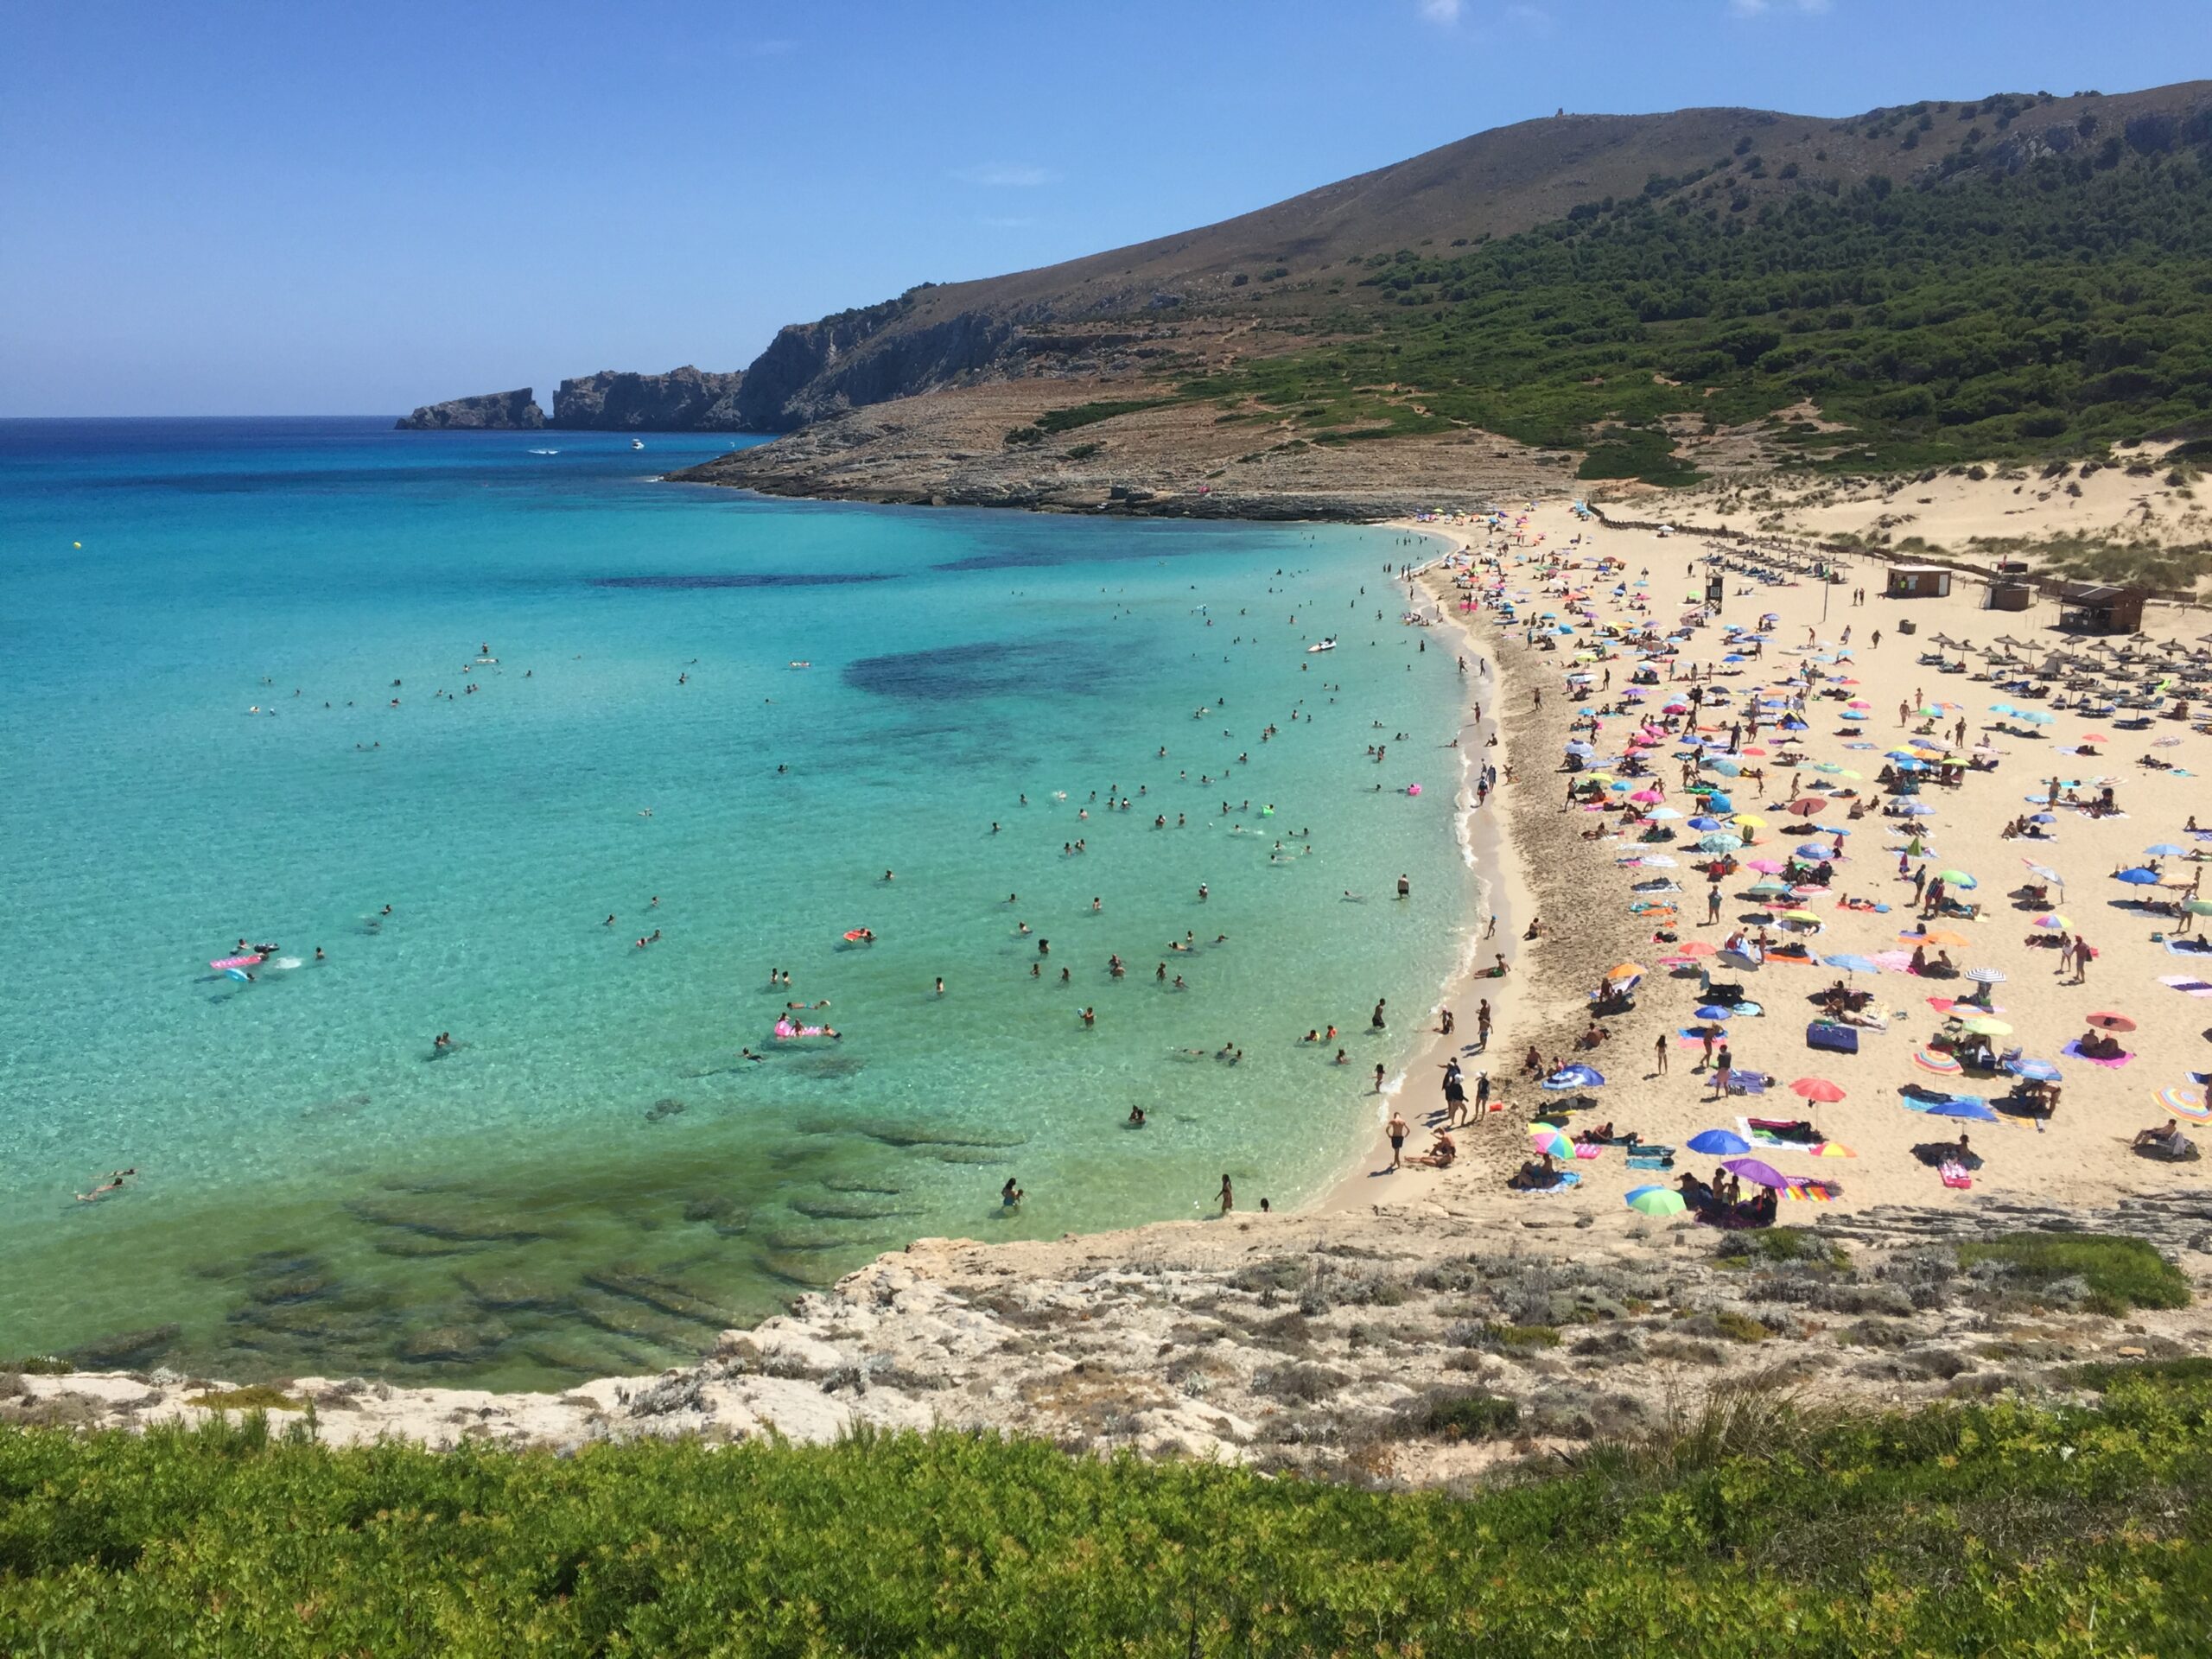 plaża Cala mesquida na Majorce